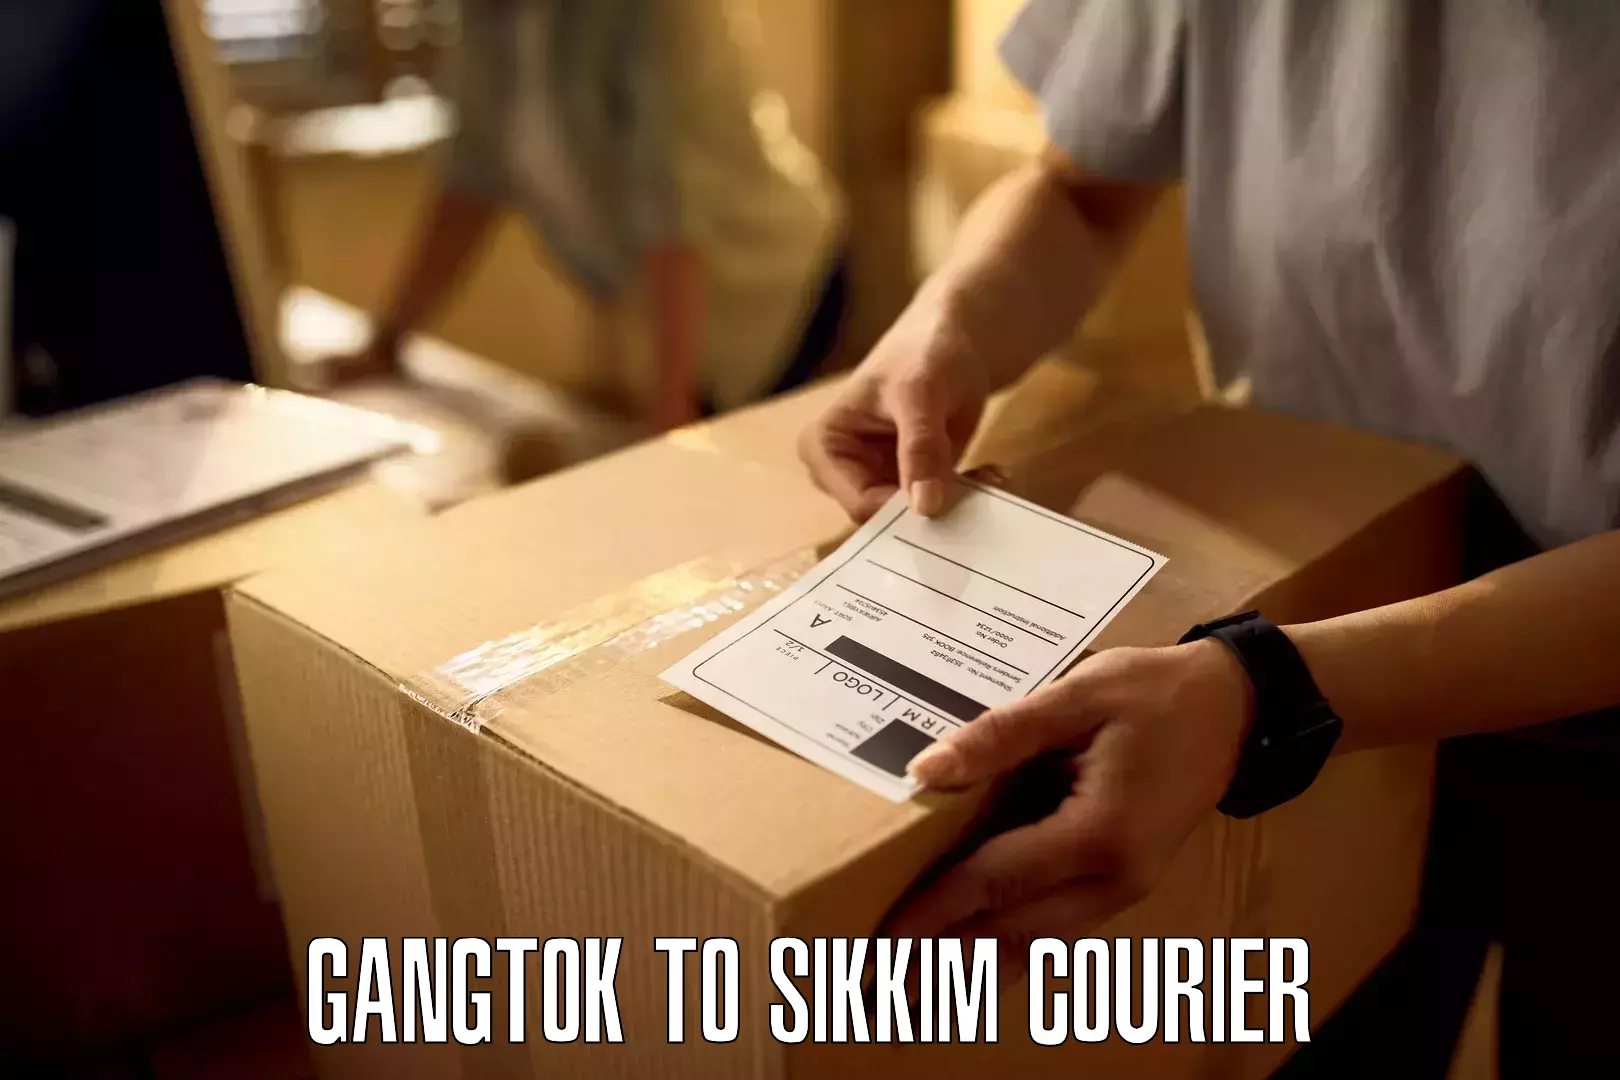 Courier app Gangtok to East Sikkim